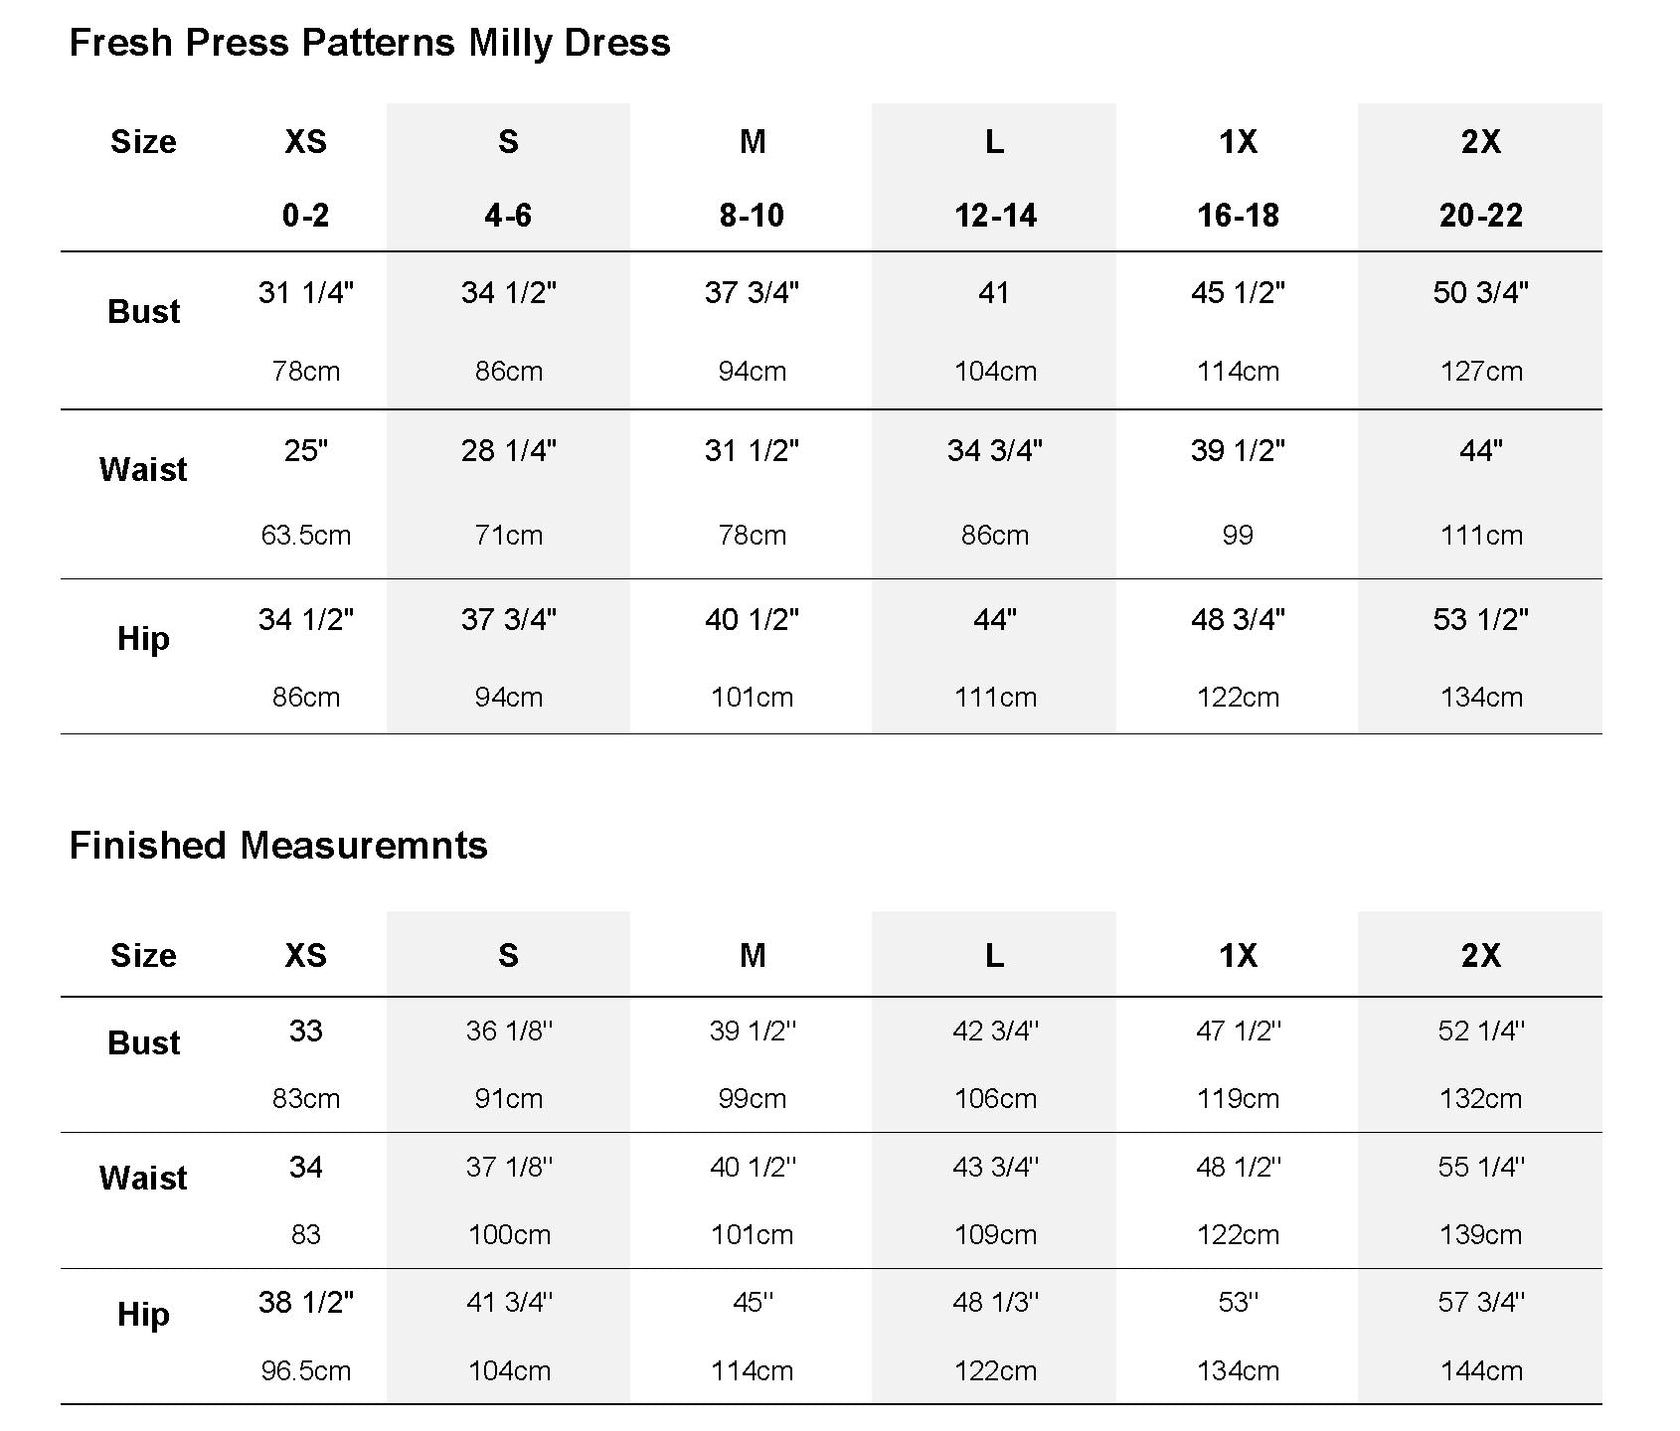 Milly Dress – Fresh Press Patterns